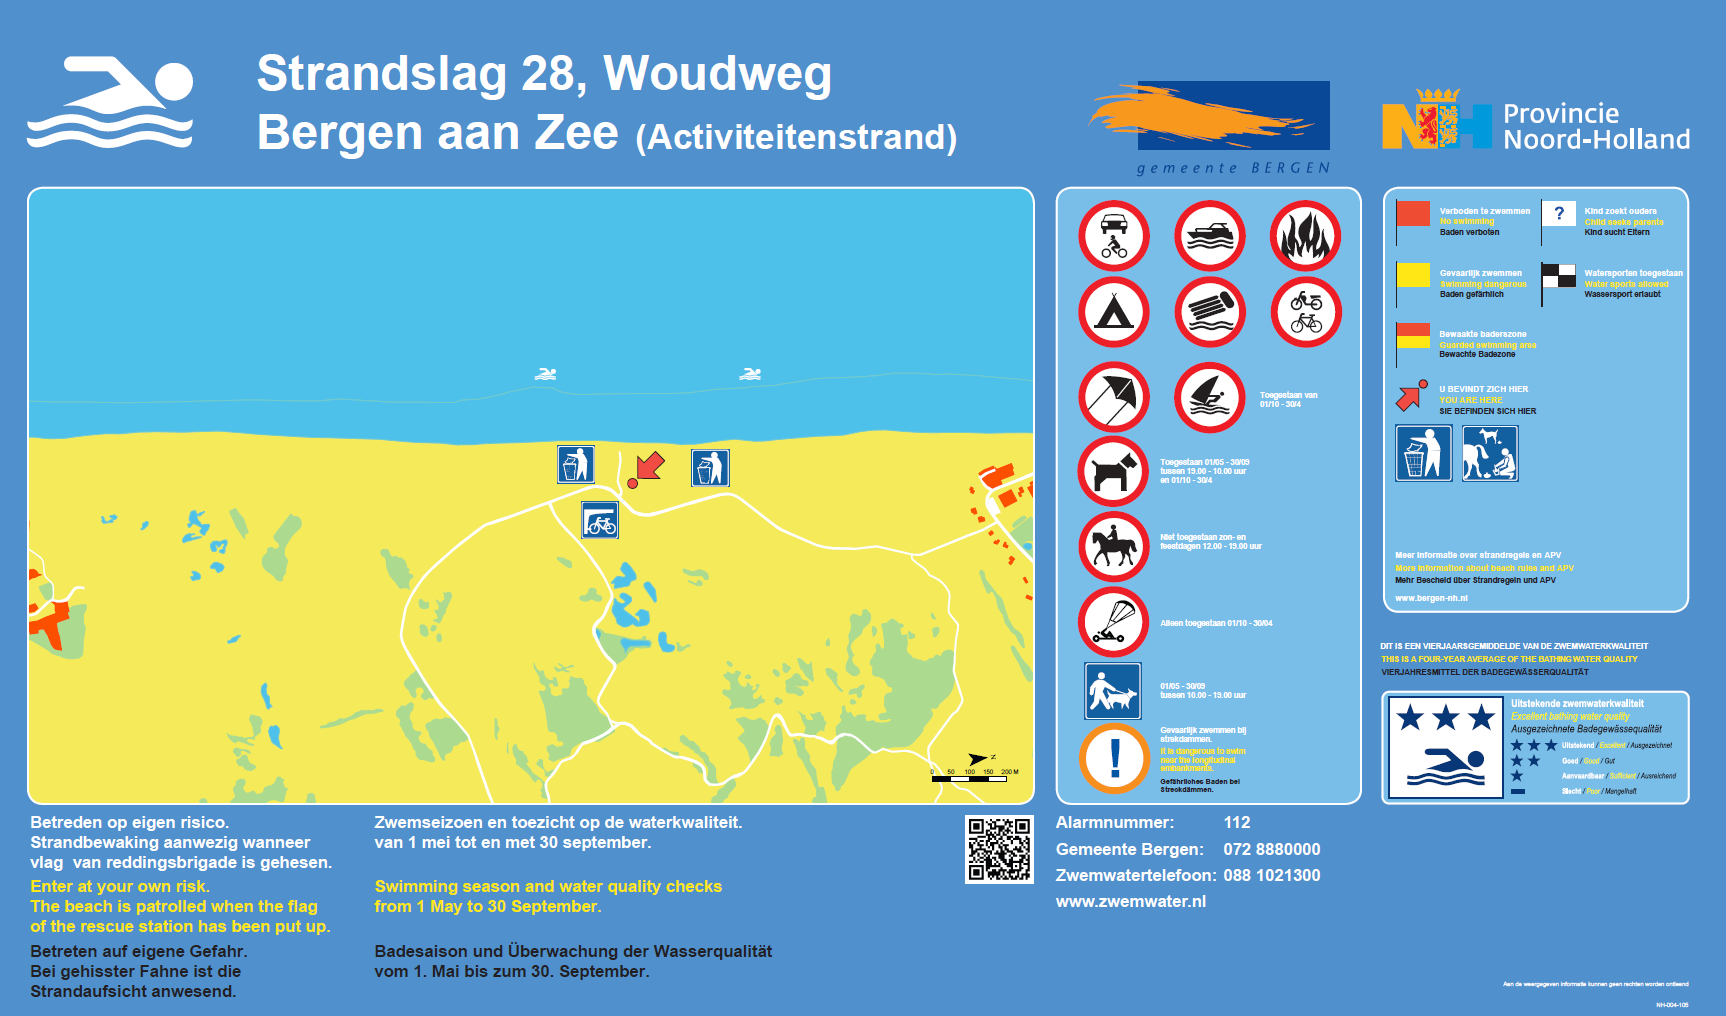 The information board at the swimming location Bergen aan Zee, Burgemeesterspaadje, Strandslag 28